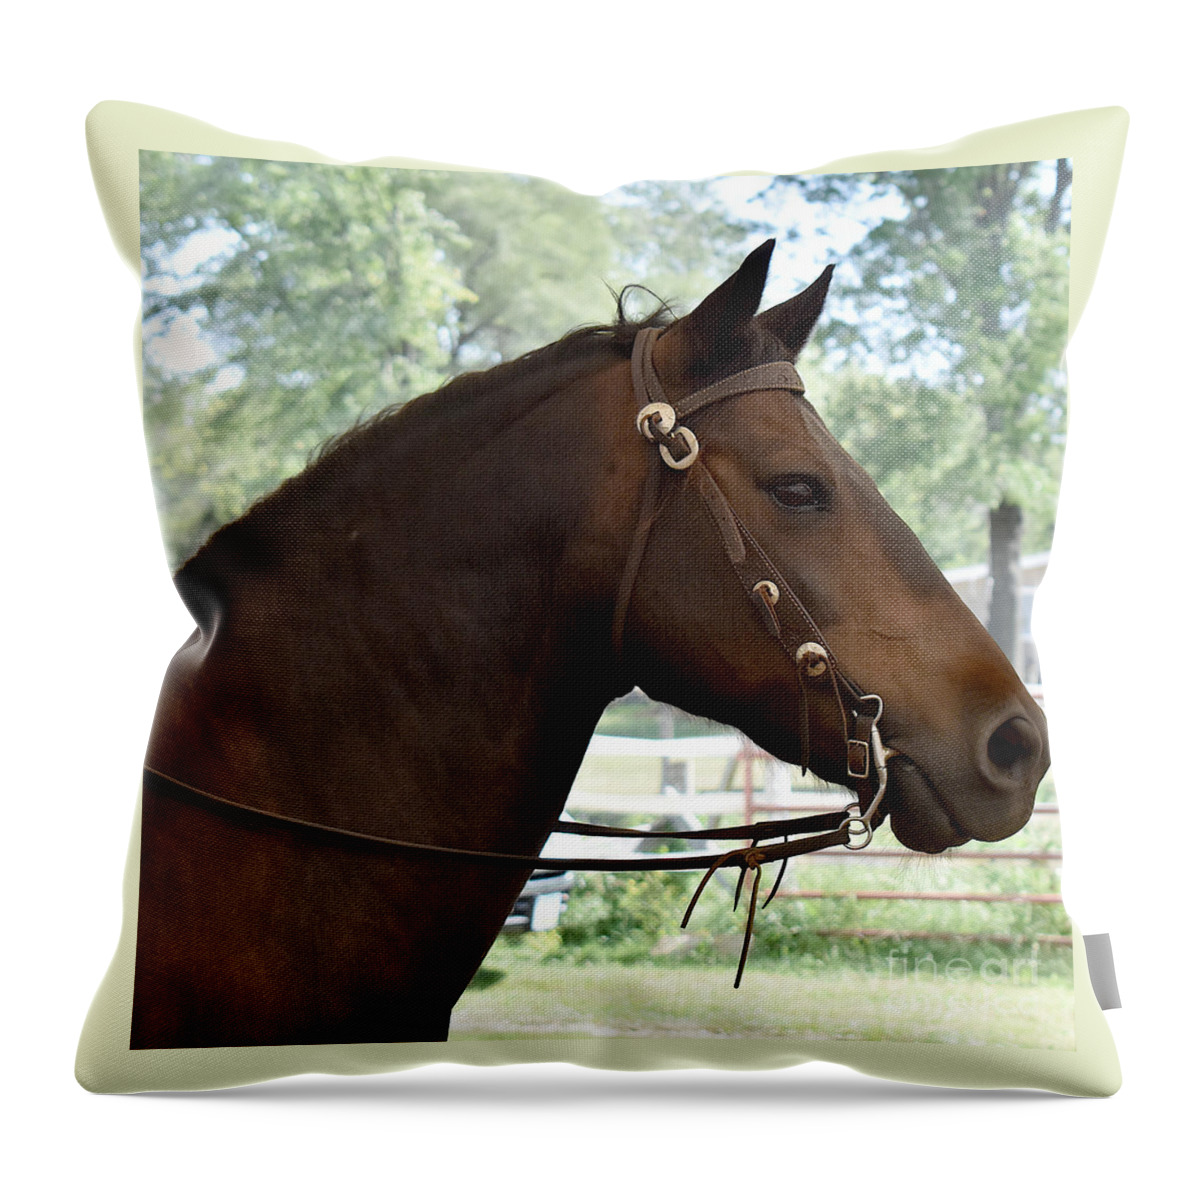 Horse Throw Pillow featuring the photograph Morgan Horse Portrait by Linda Brittain